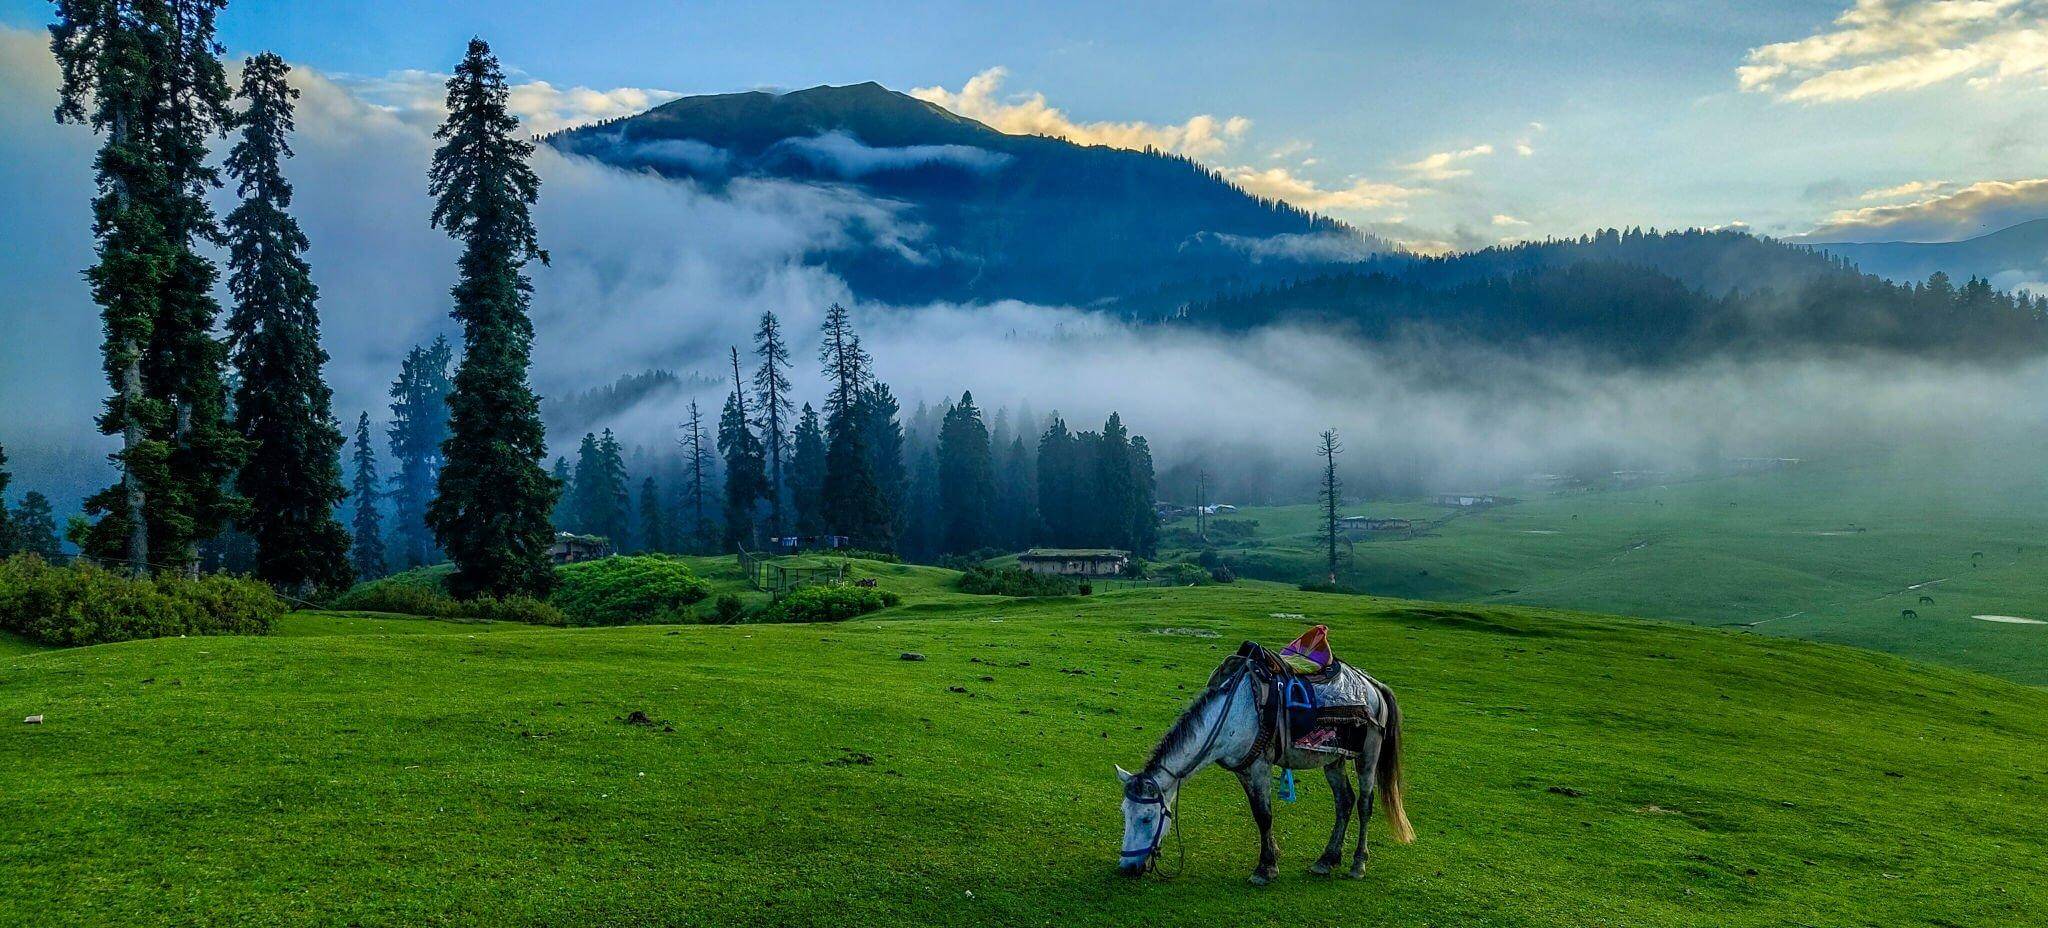 Kashmir Tour Package: Explore the Paradise on Earth